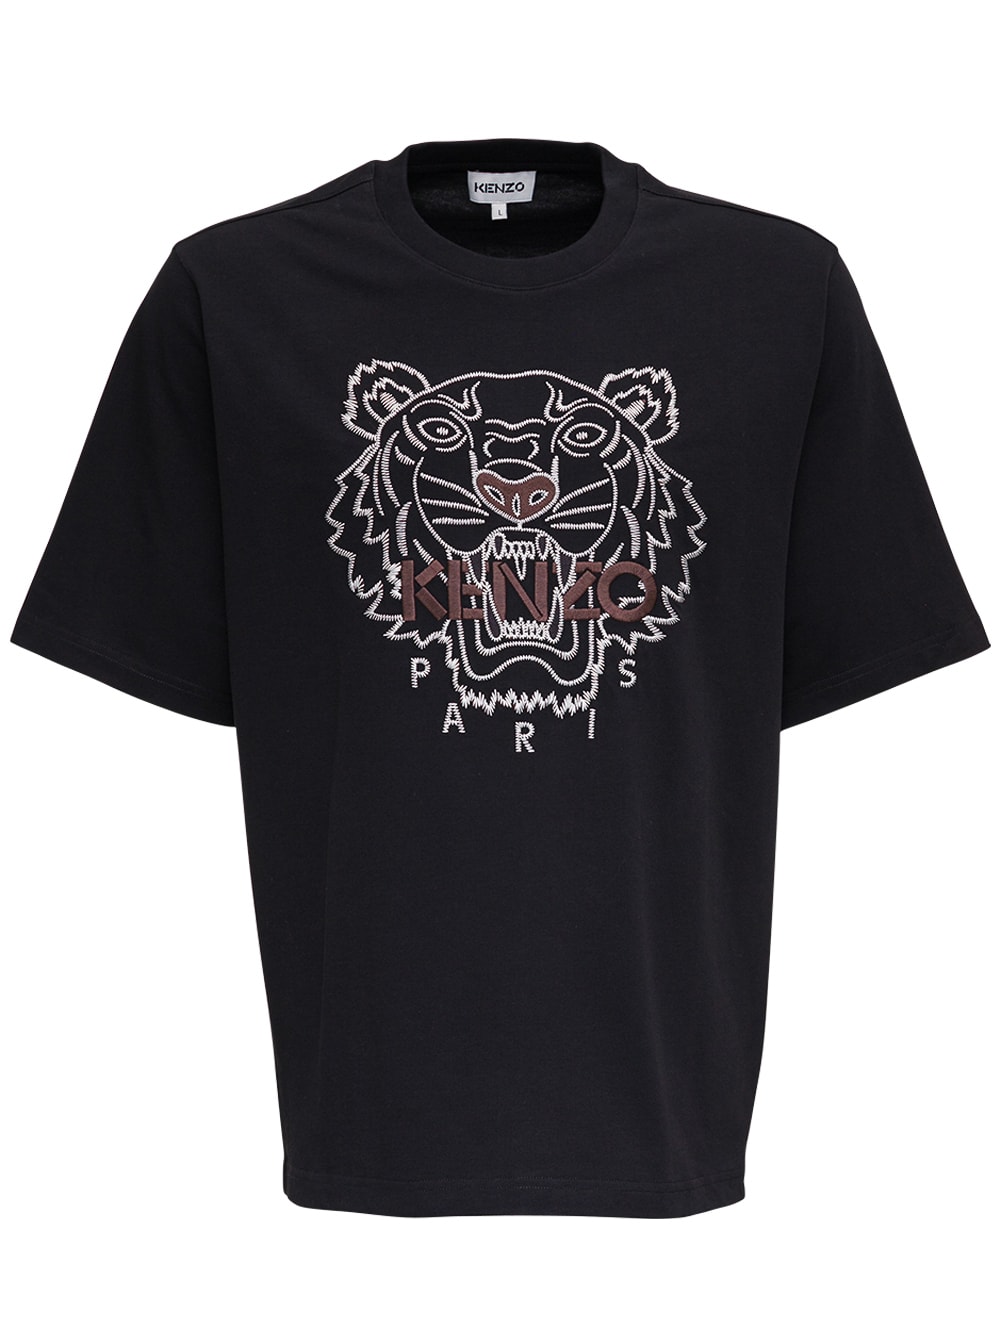 Kenzo Black Seasonal Cotton T-shirt With Tiger Print